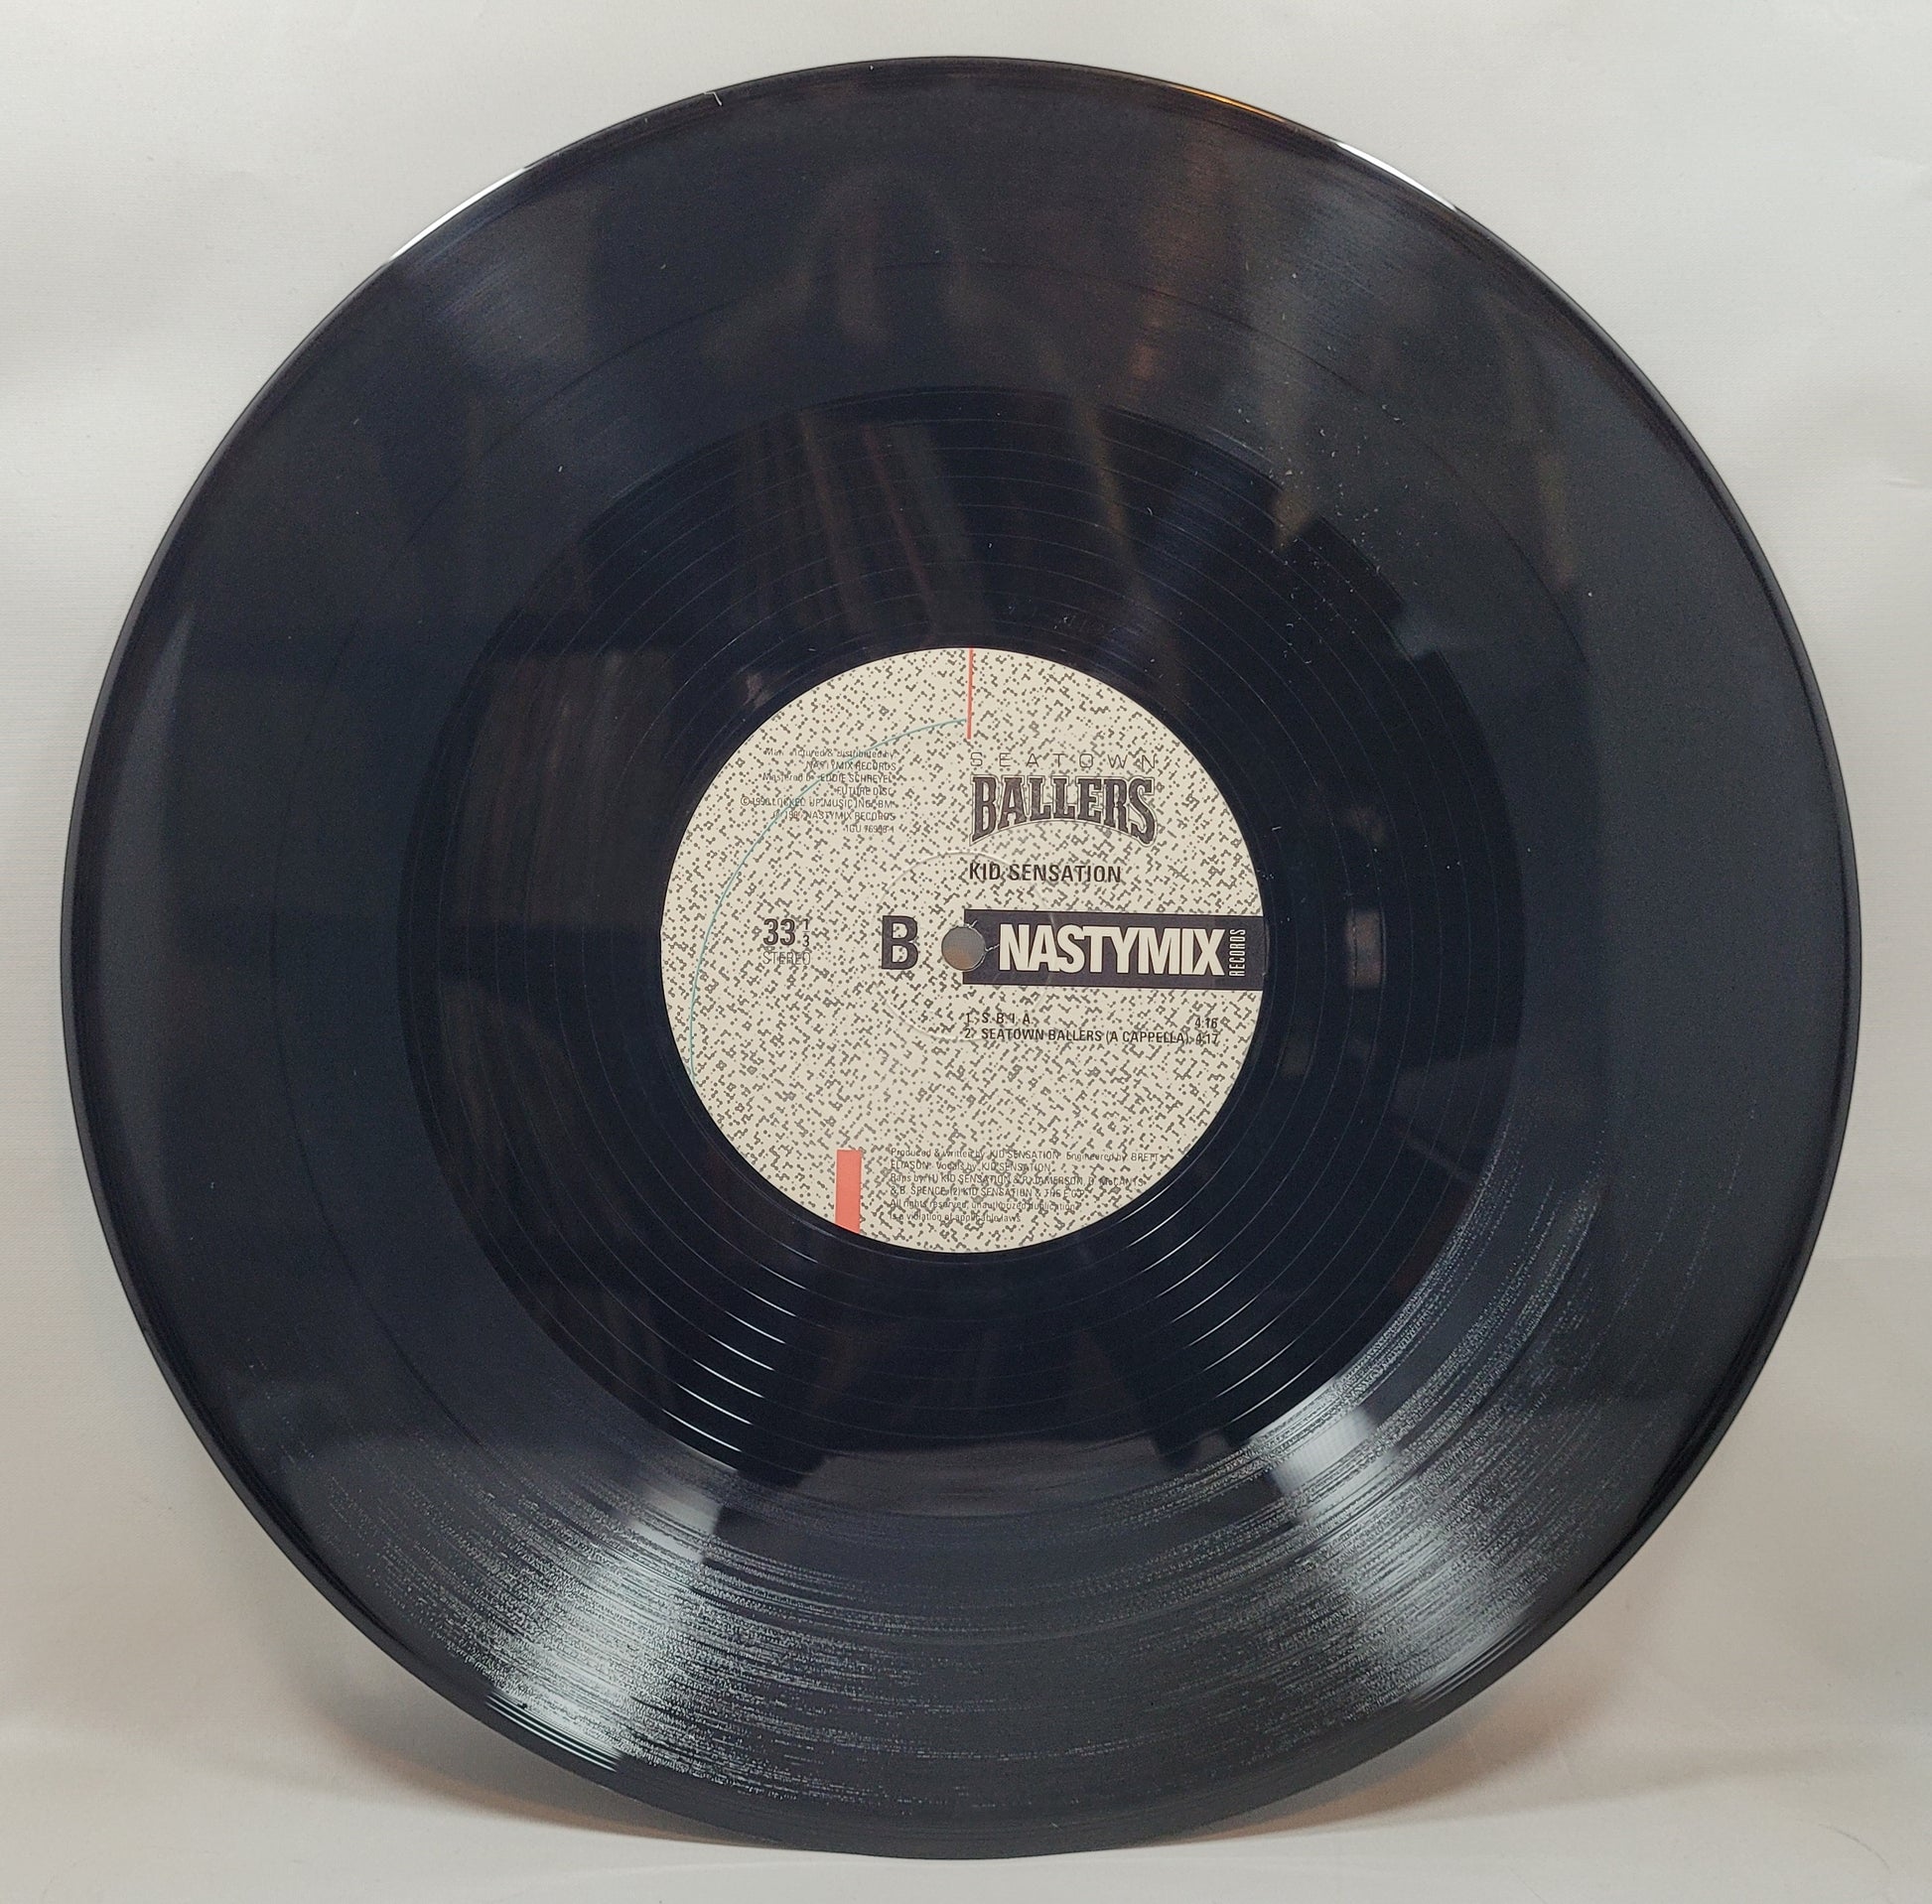 Kid Sensation - Seatown Ballers [1990 Used Vinyl Record 12" Single]